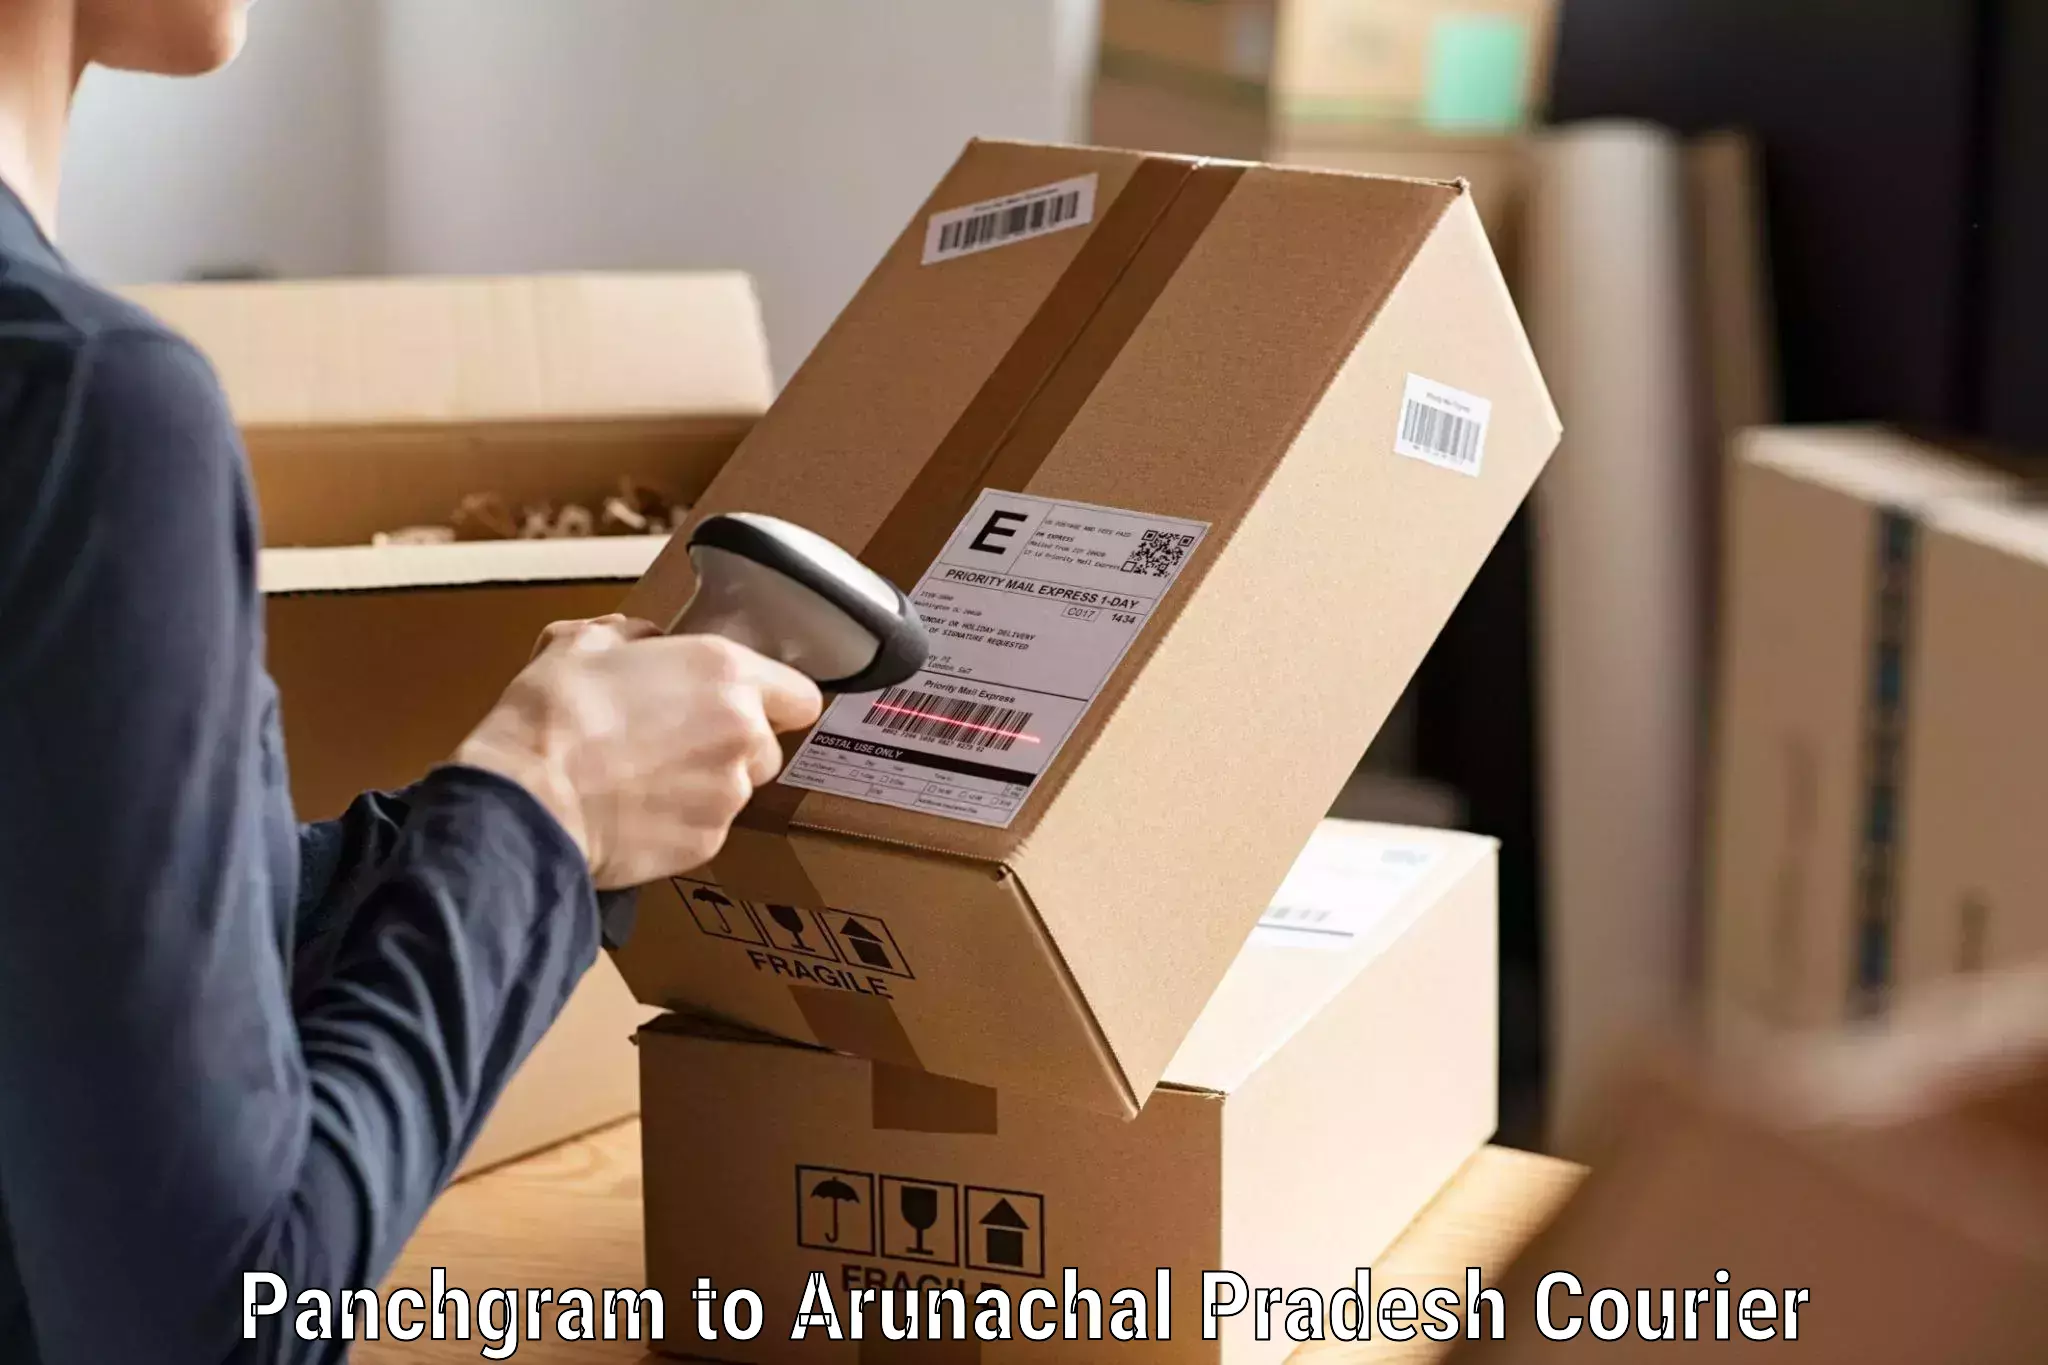 Easy return solutions Panchgram to Arunachal Pradesh